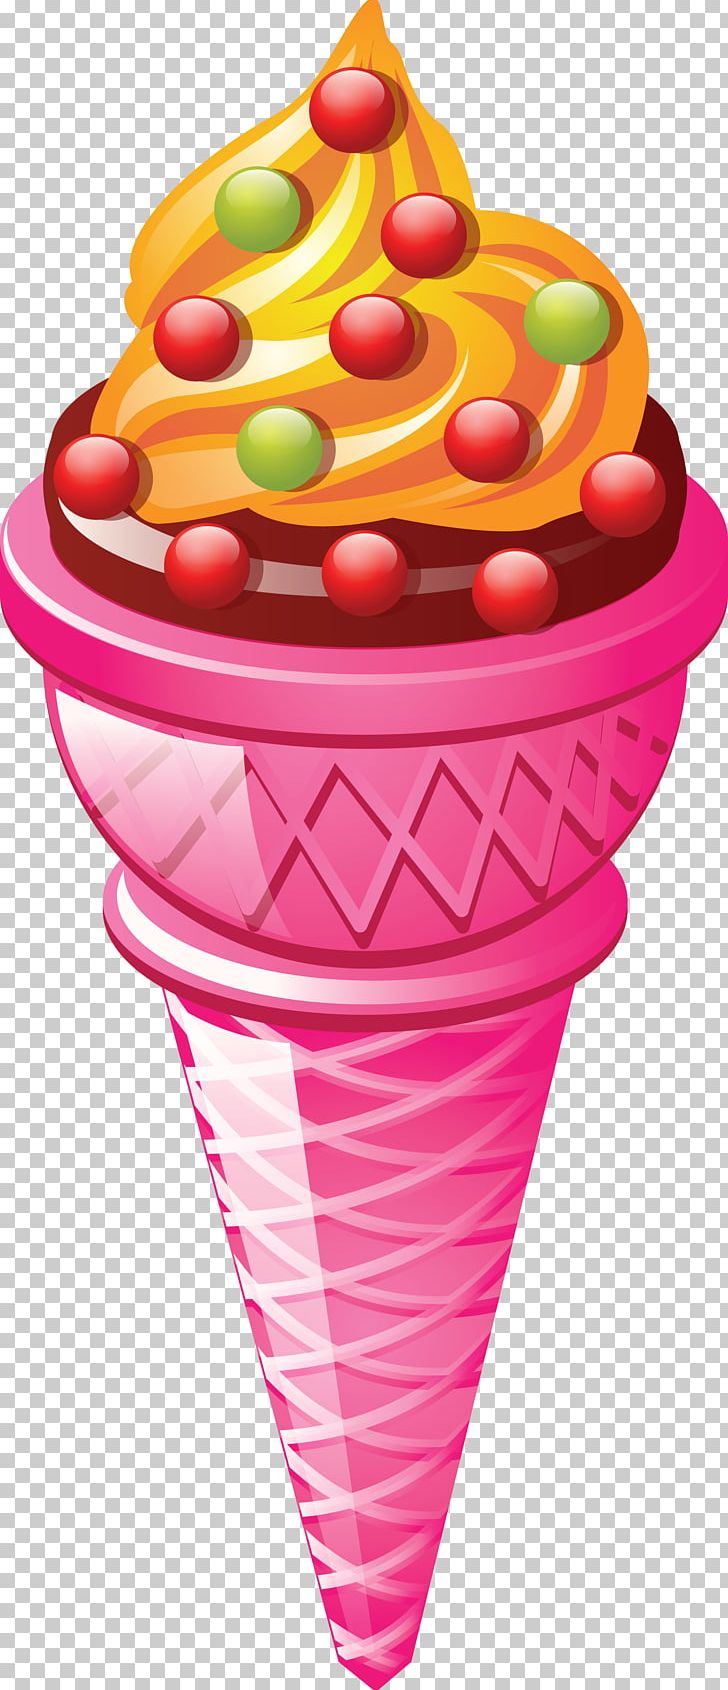 Ice Cream Cones Cupcake Chocolate Ice Cream PNG, Clipart, Art, Cake, Candy, Chocolate Ice Cream, Cream Free PNG Download